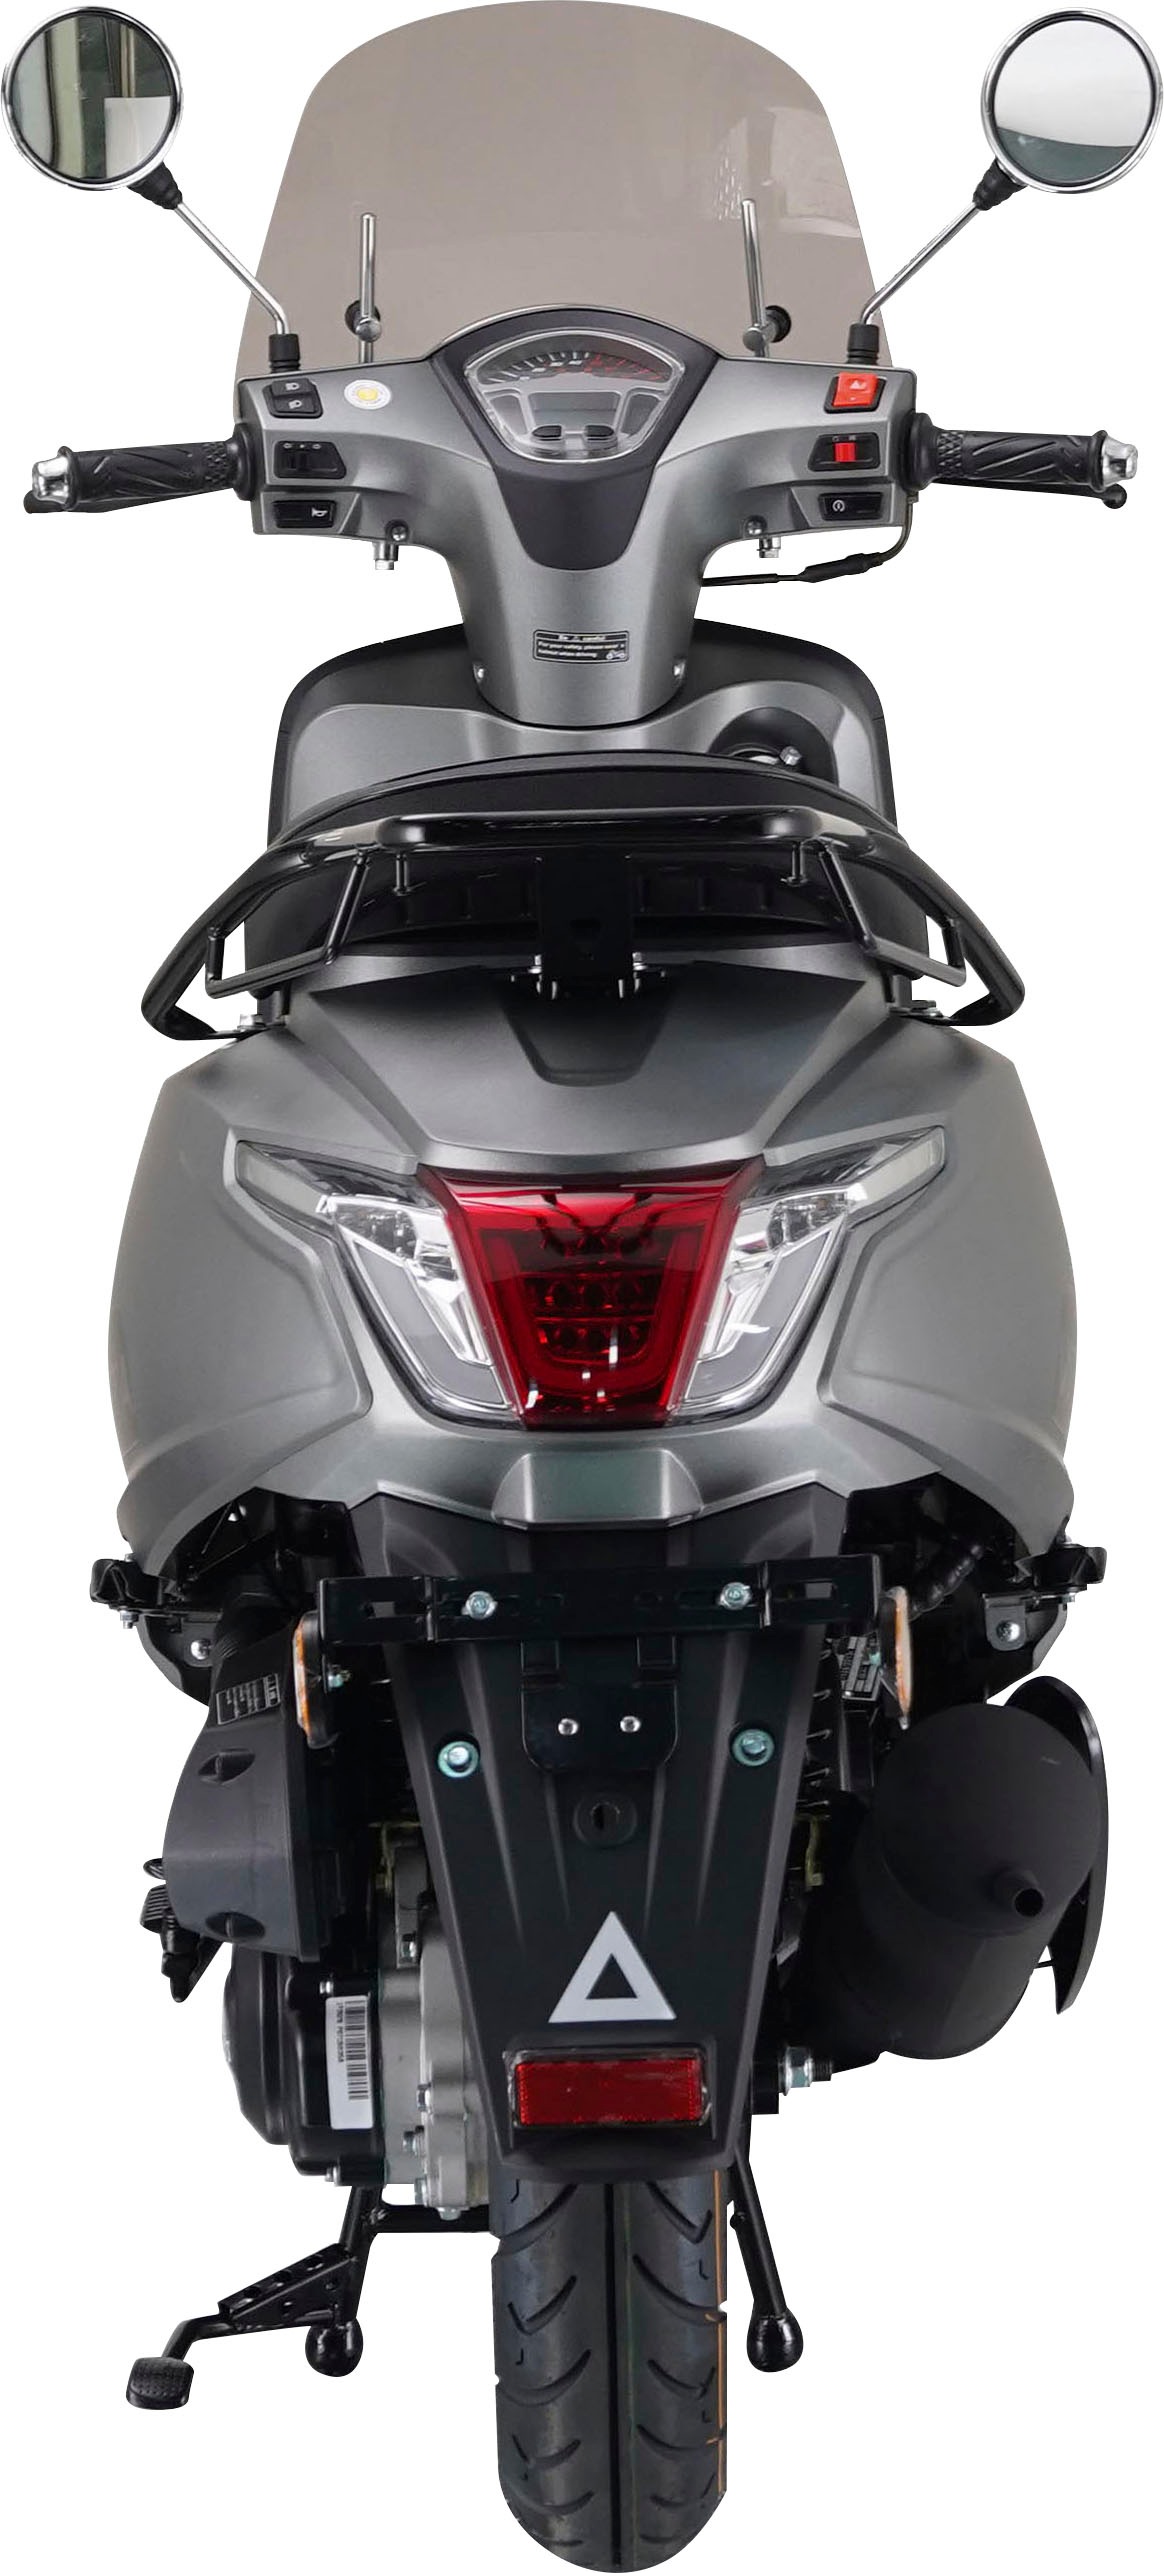 Alpha Motors Motorroller »Vita«, 50 cm³, 45 km/h, Euro 5, 2,99 PS, (inkl. Windschild), mit Lenkerschloss und Windschild